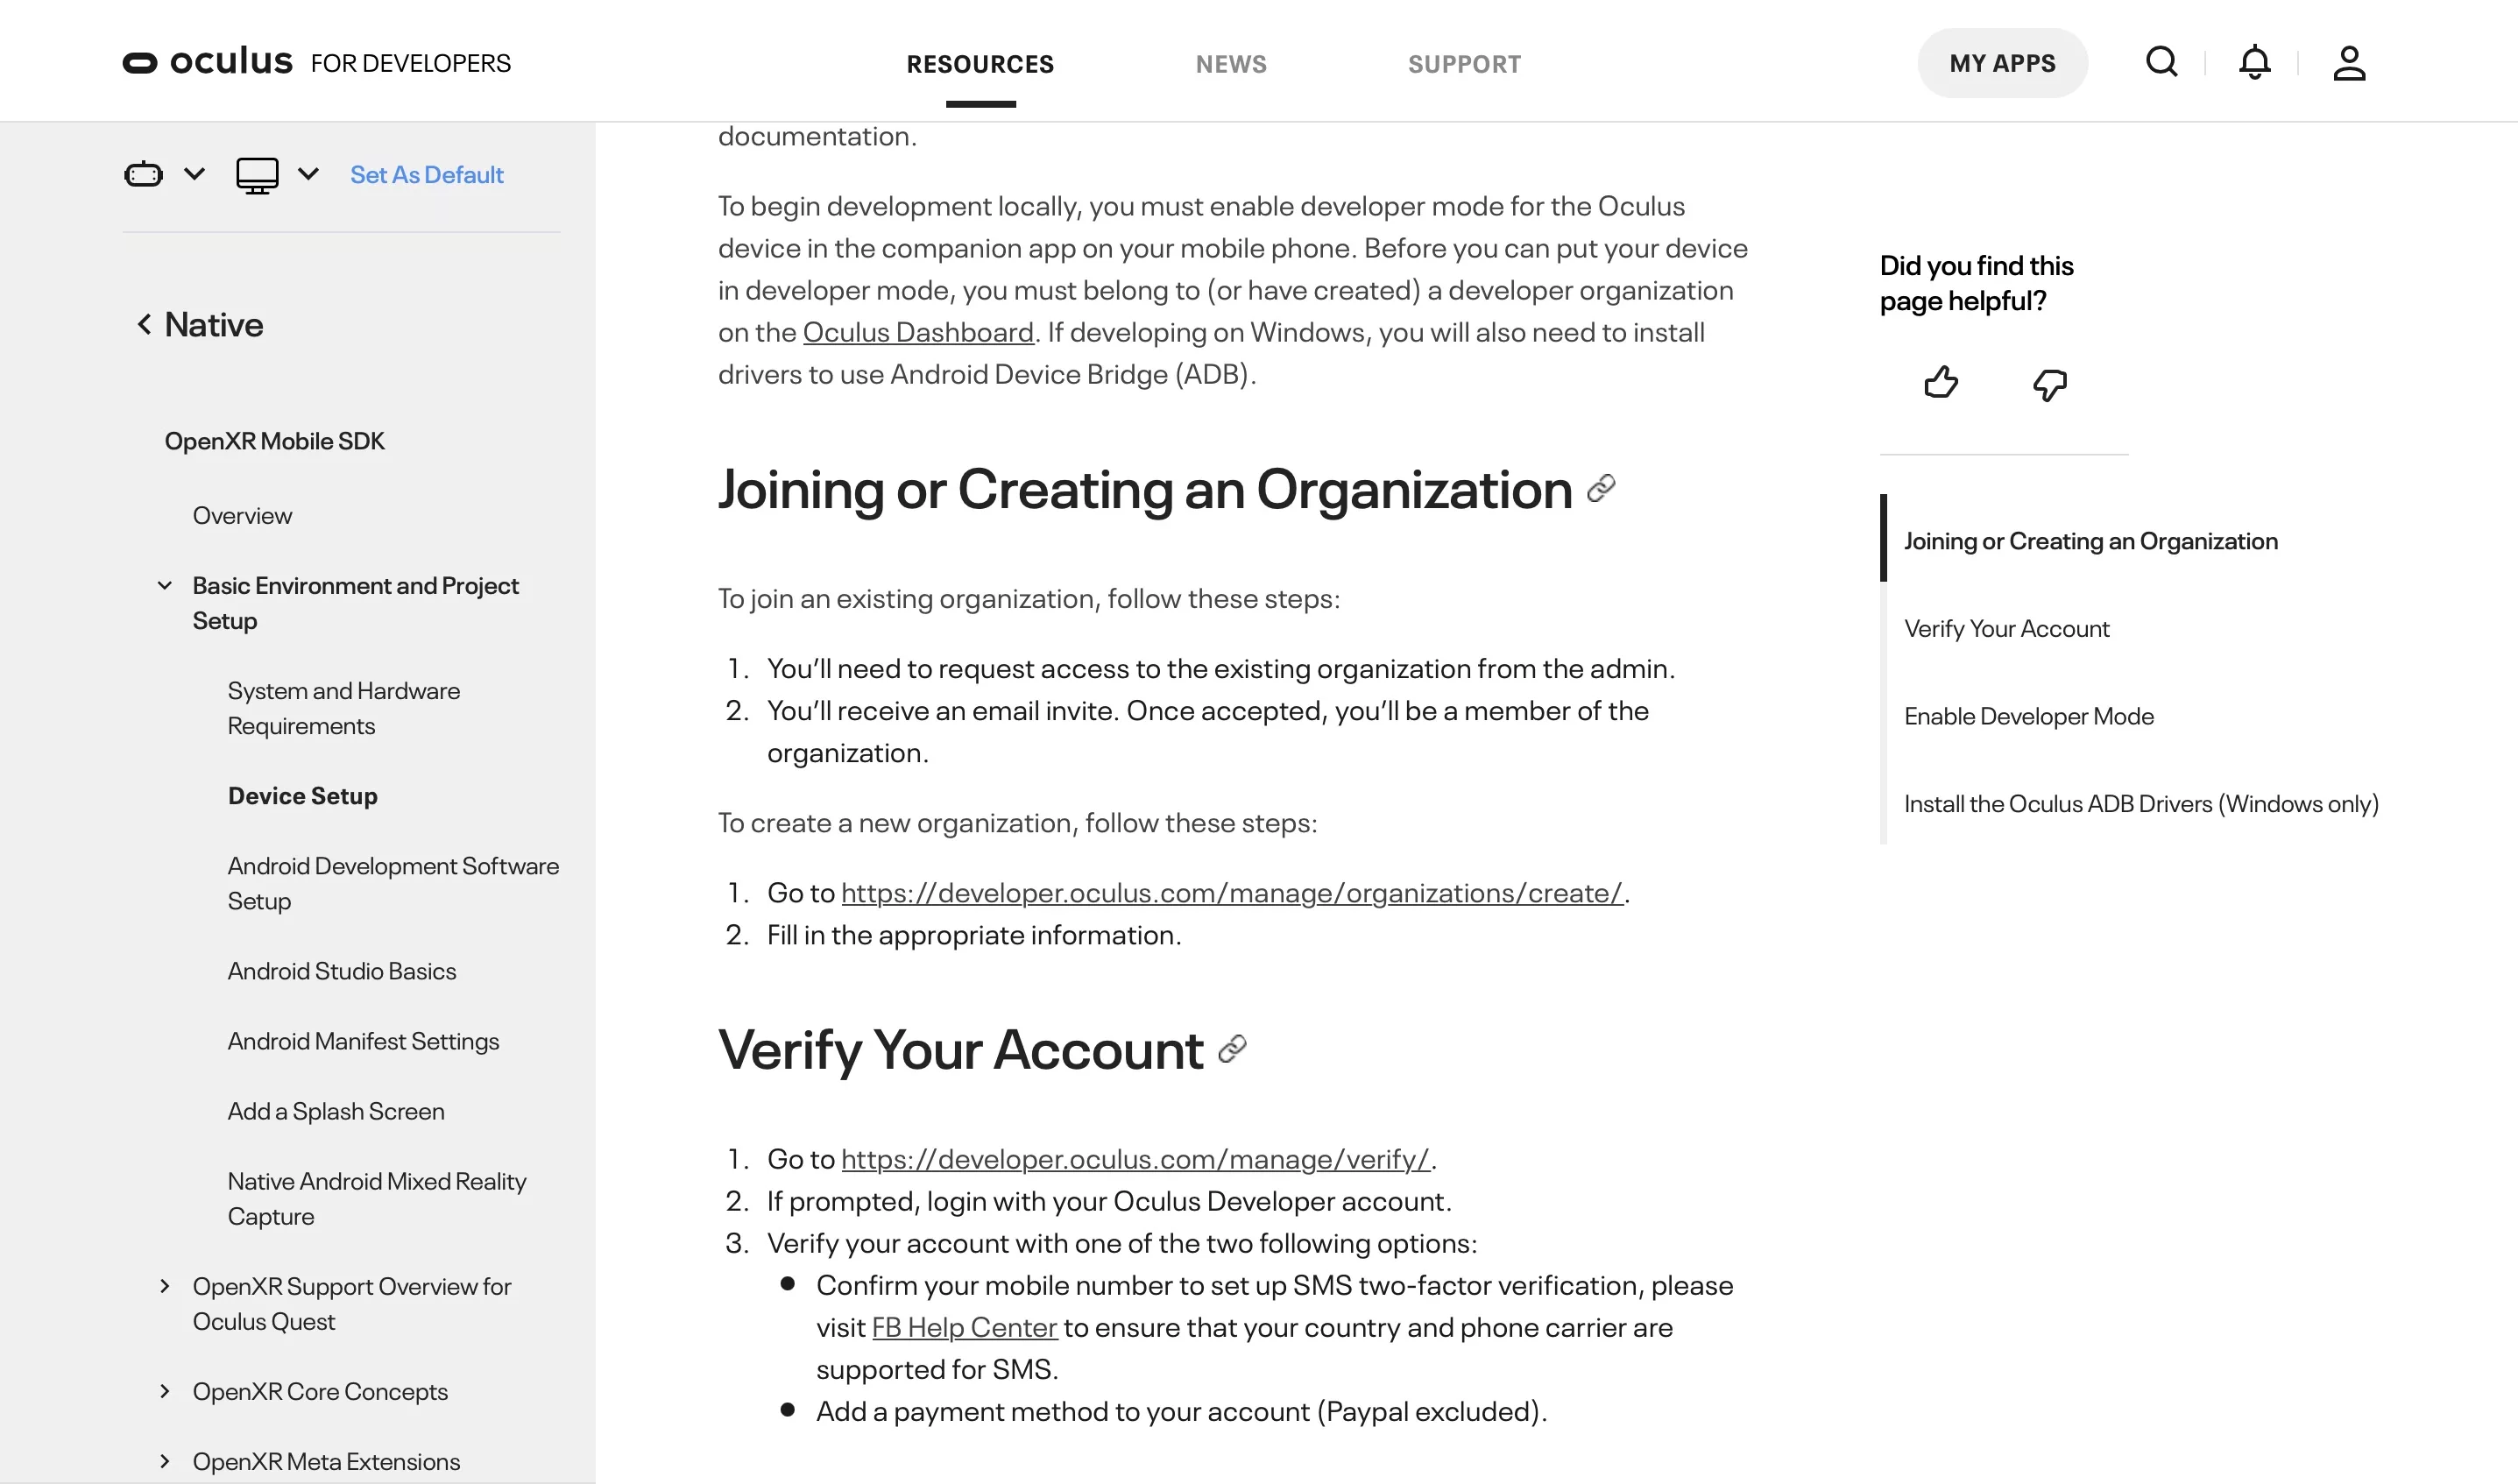 A screenshot of the Oculus Developer documentation on how to create a developer organization.